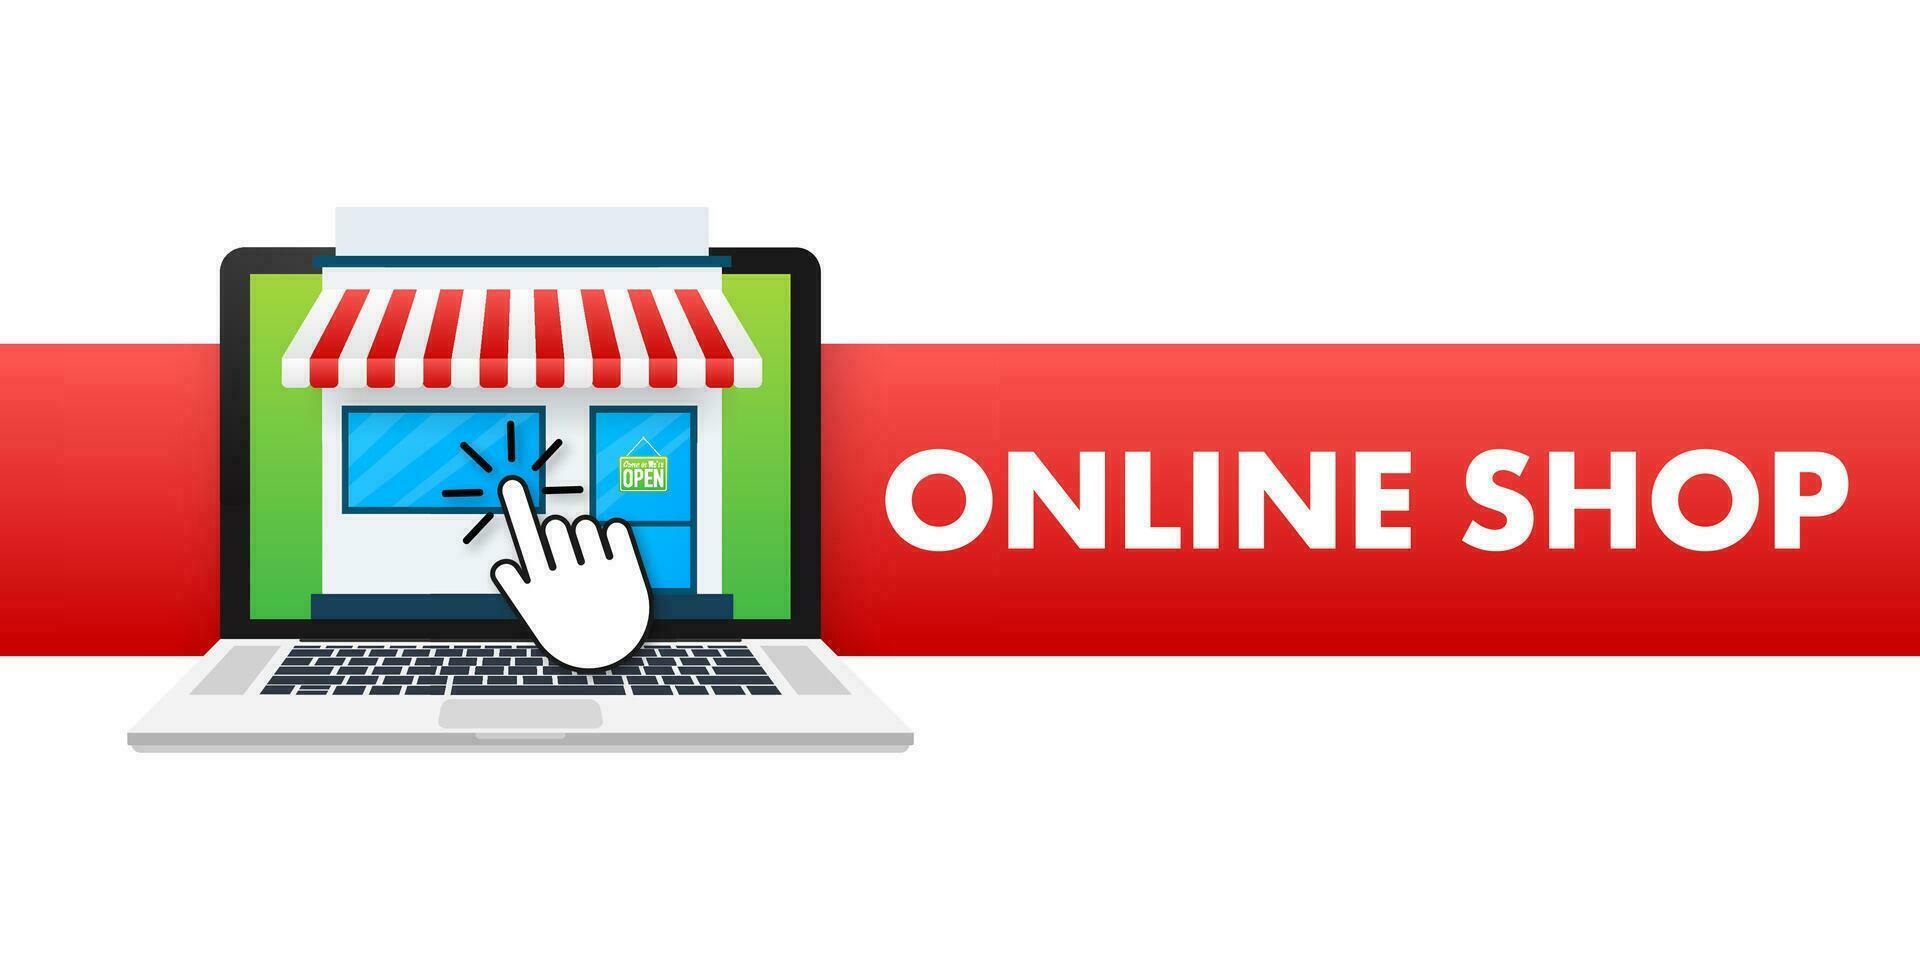 Shopping Online on Website. Online store, shop concept on laptop screen. Vector illustration.